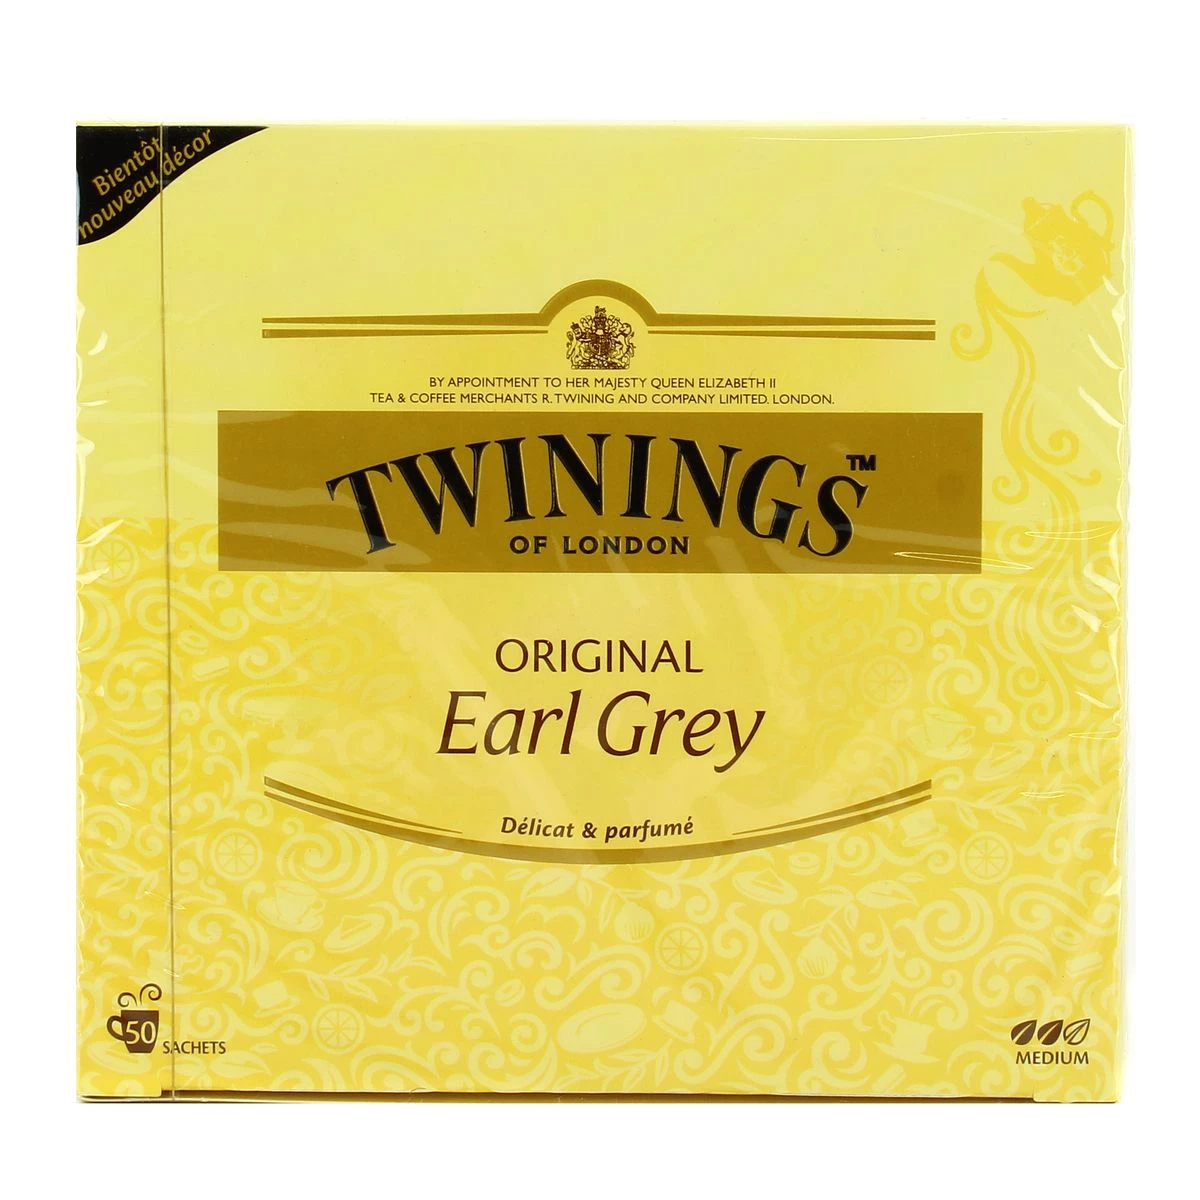 The original Earl Grey x50 100г - TWININGS